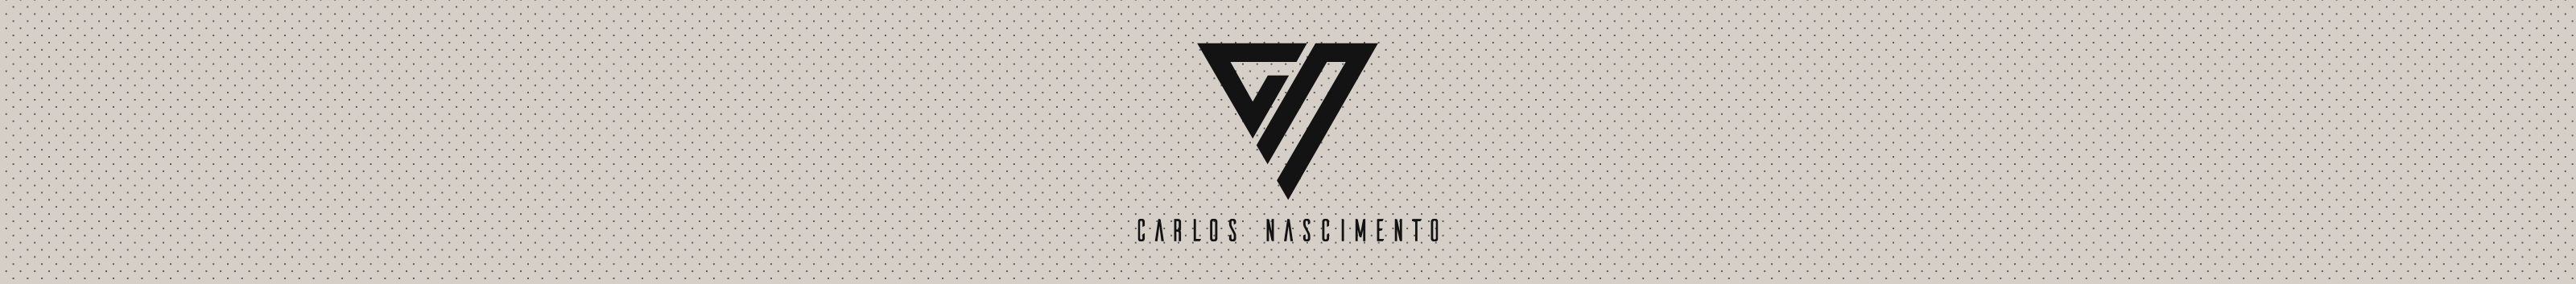 Profil-Banner von Carlos Nascimento